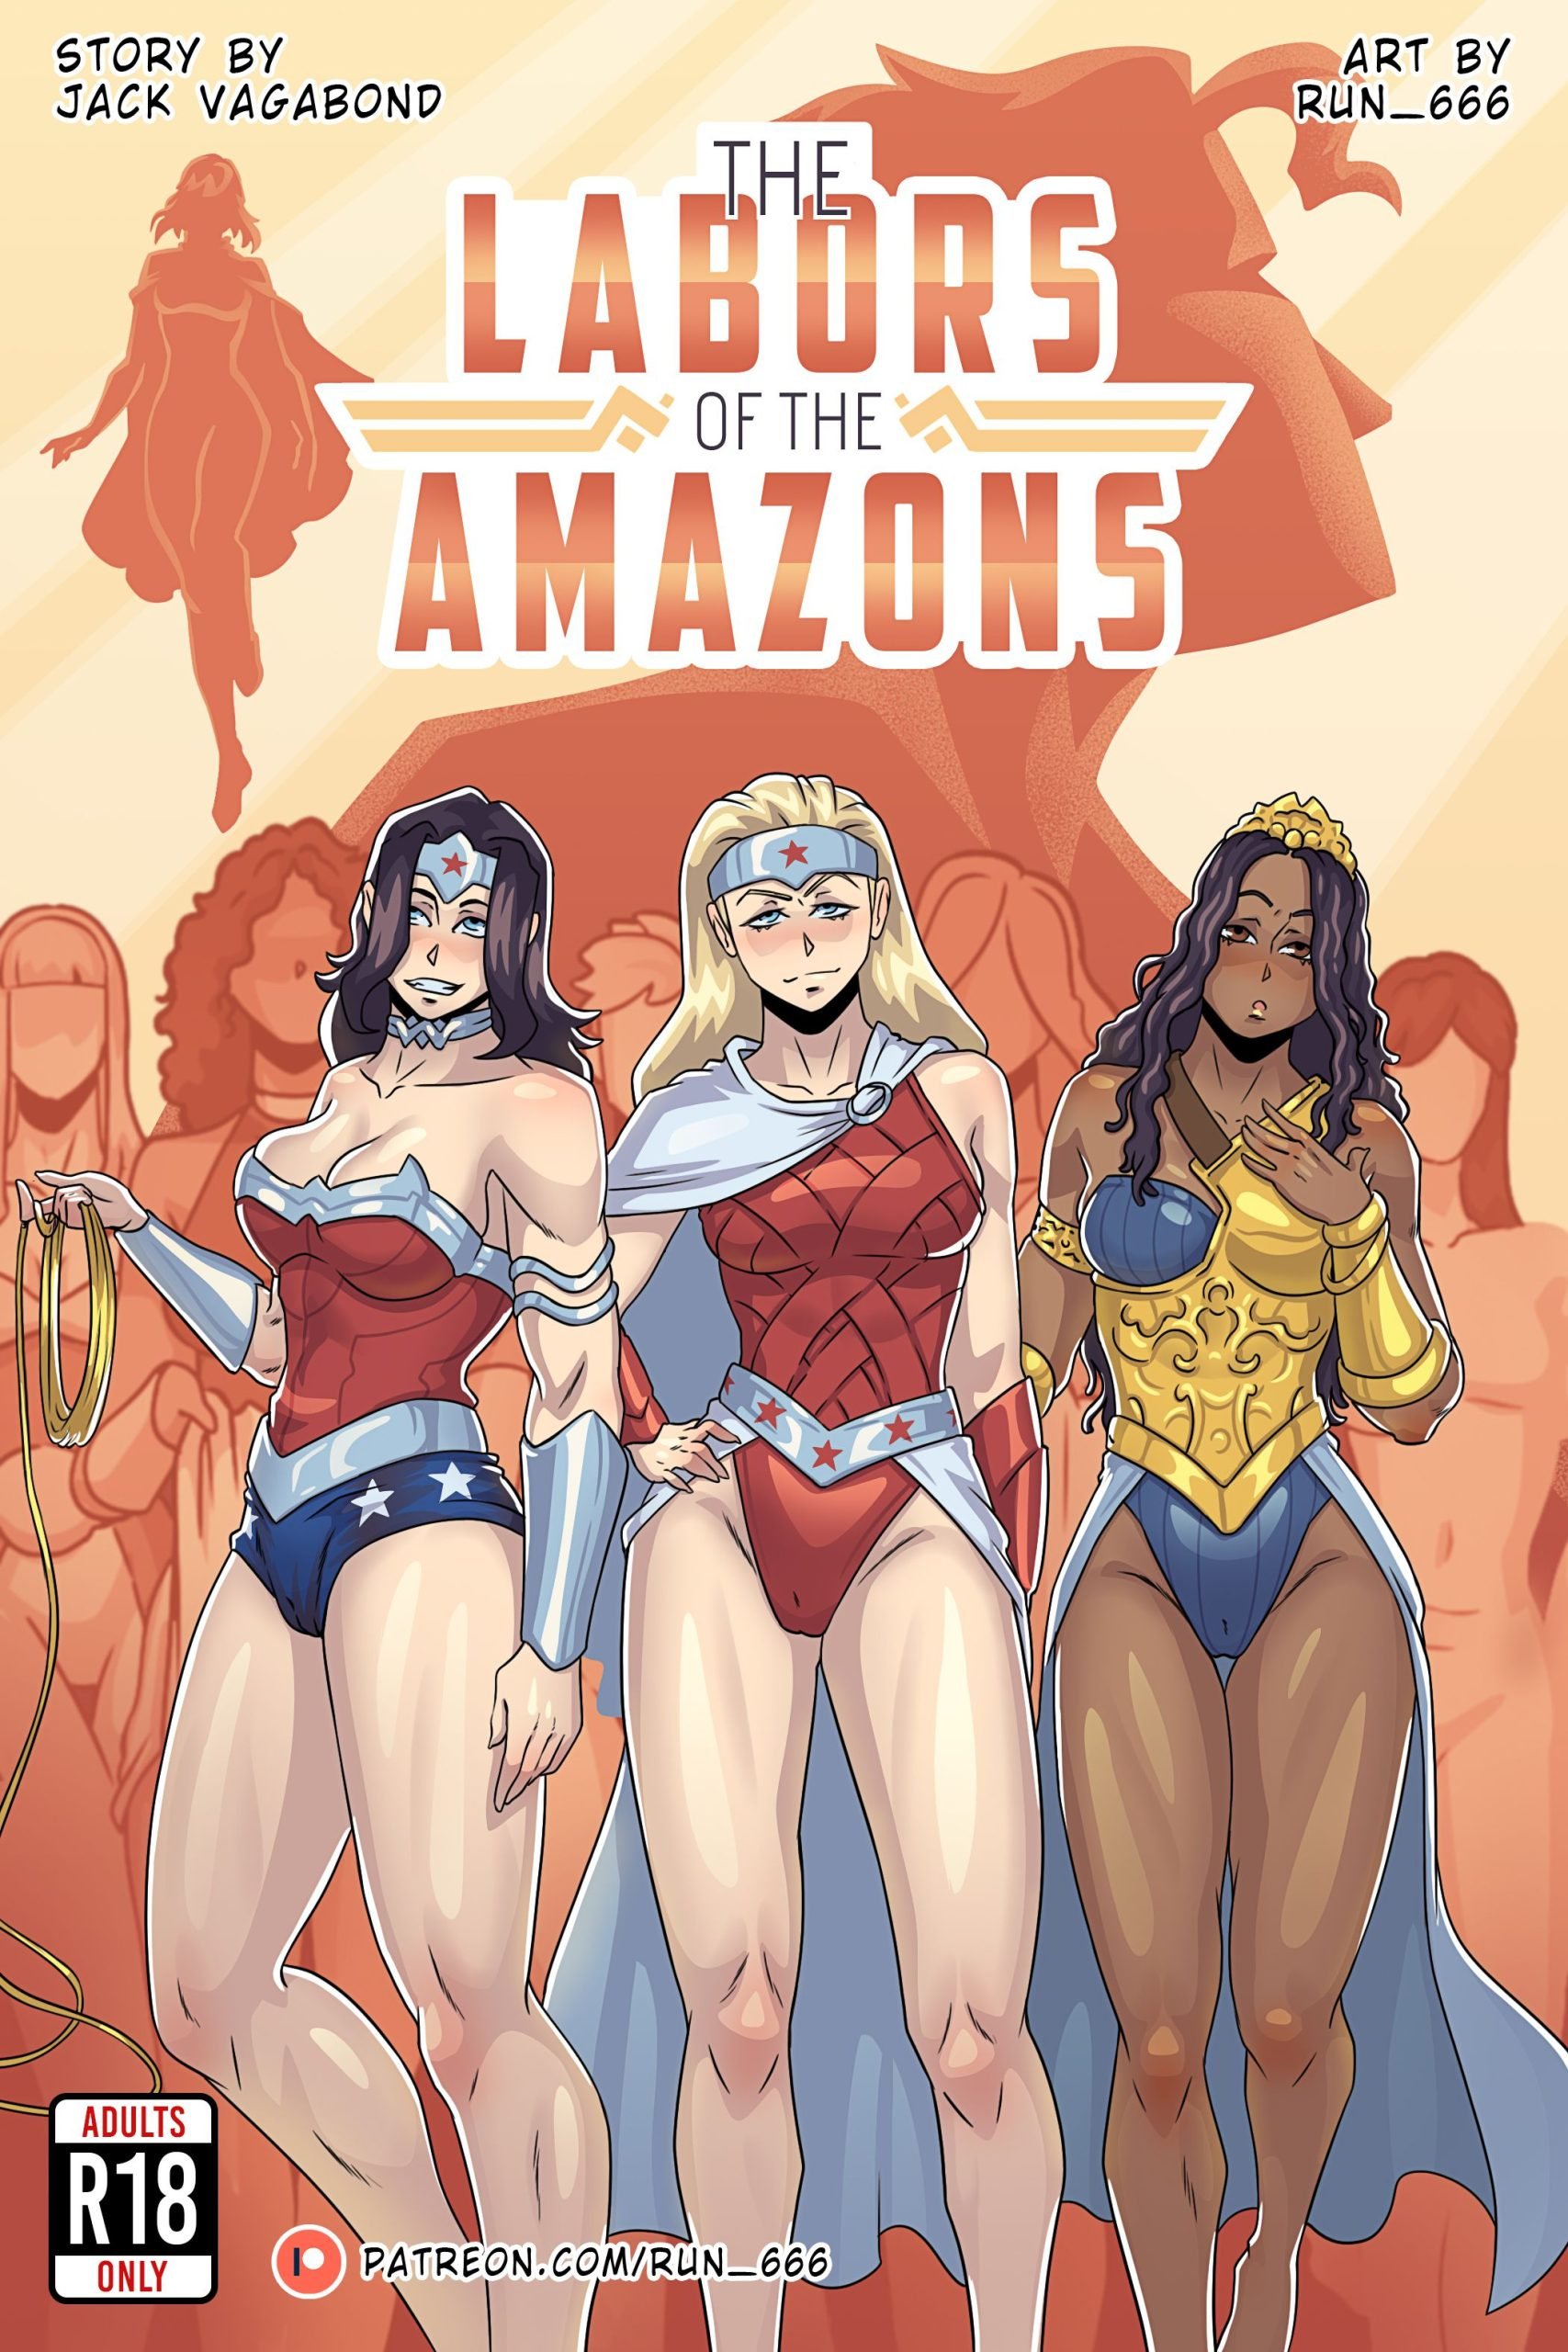 The Labors of the Amazons (Wonder Woman) Run 666 Porn Comic photo